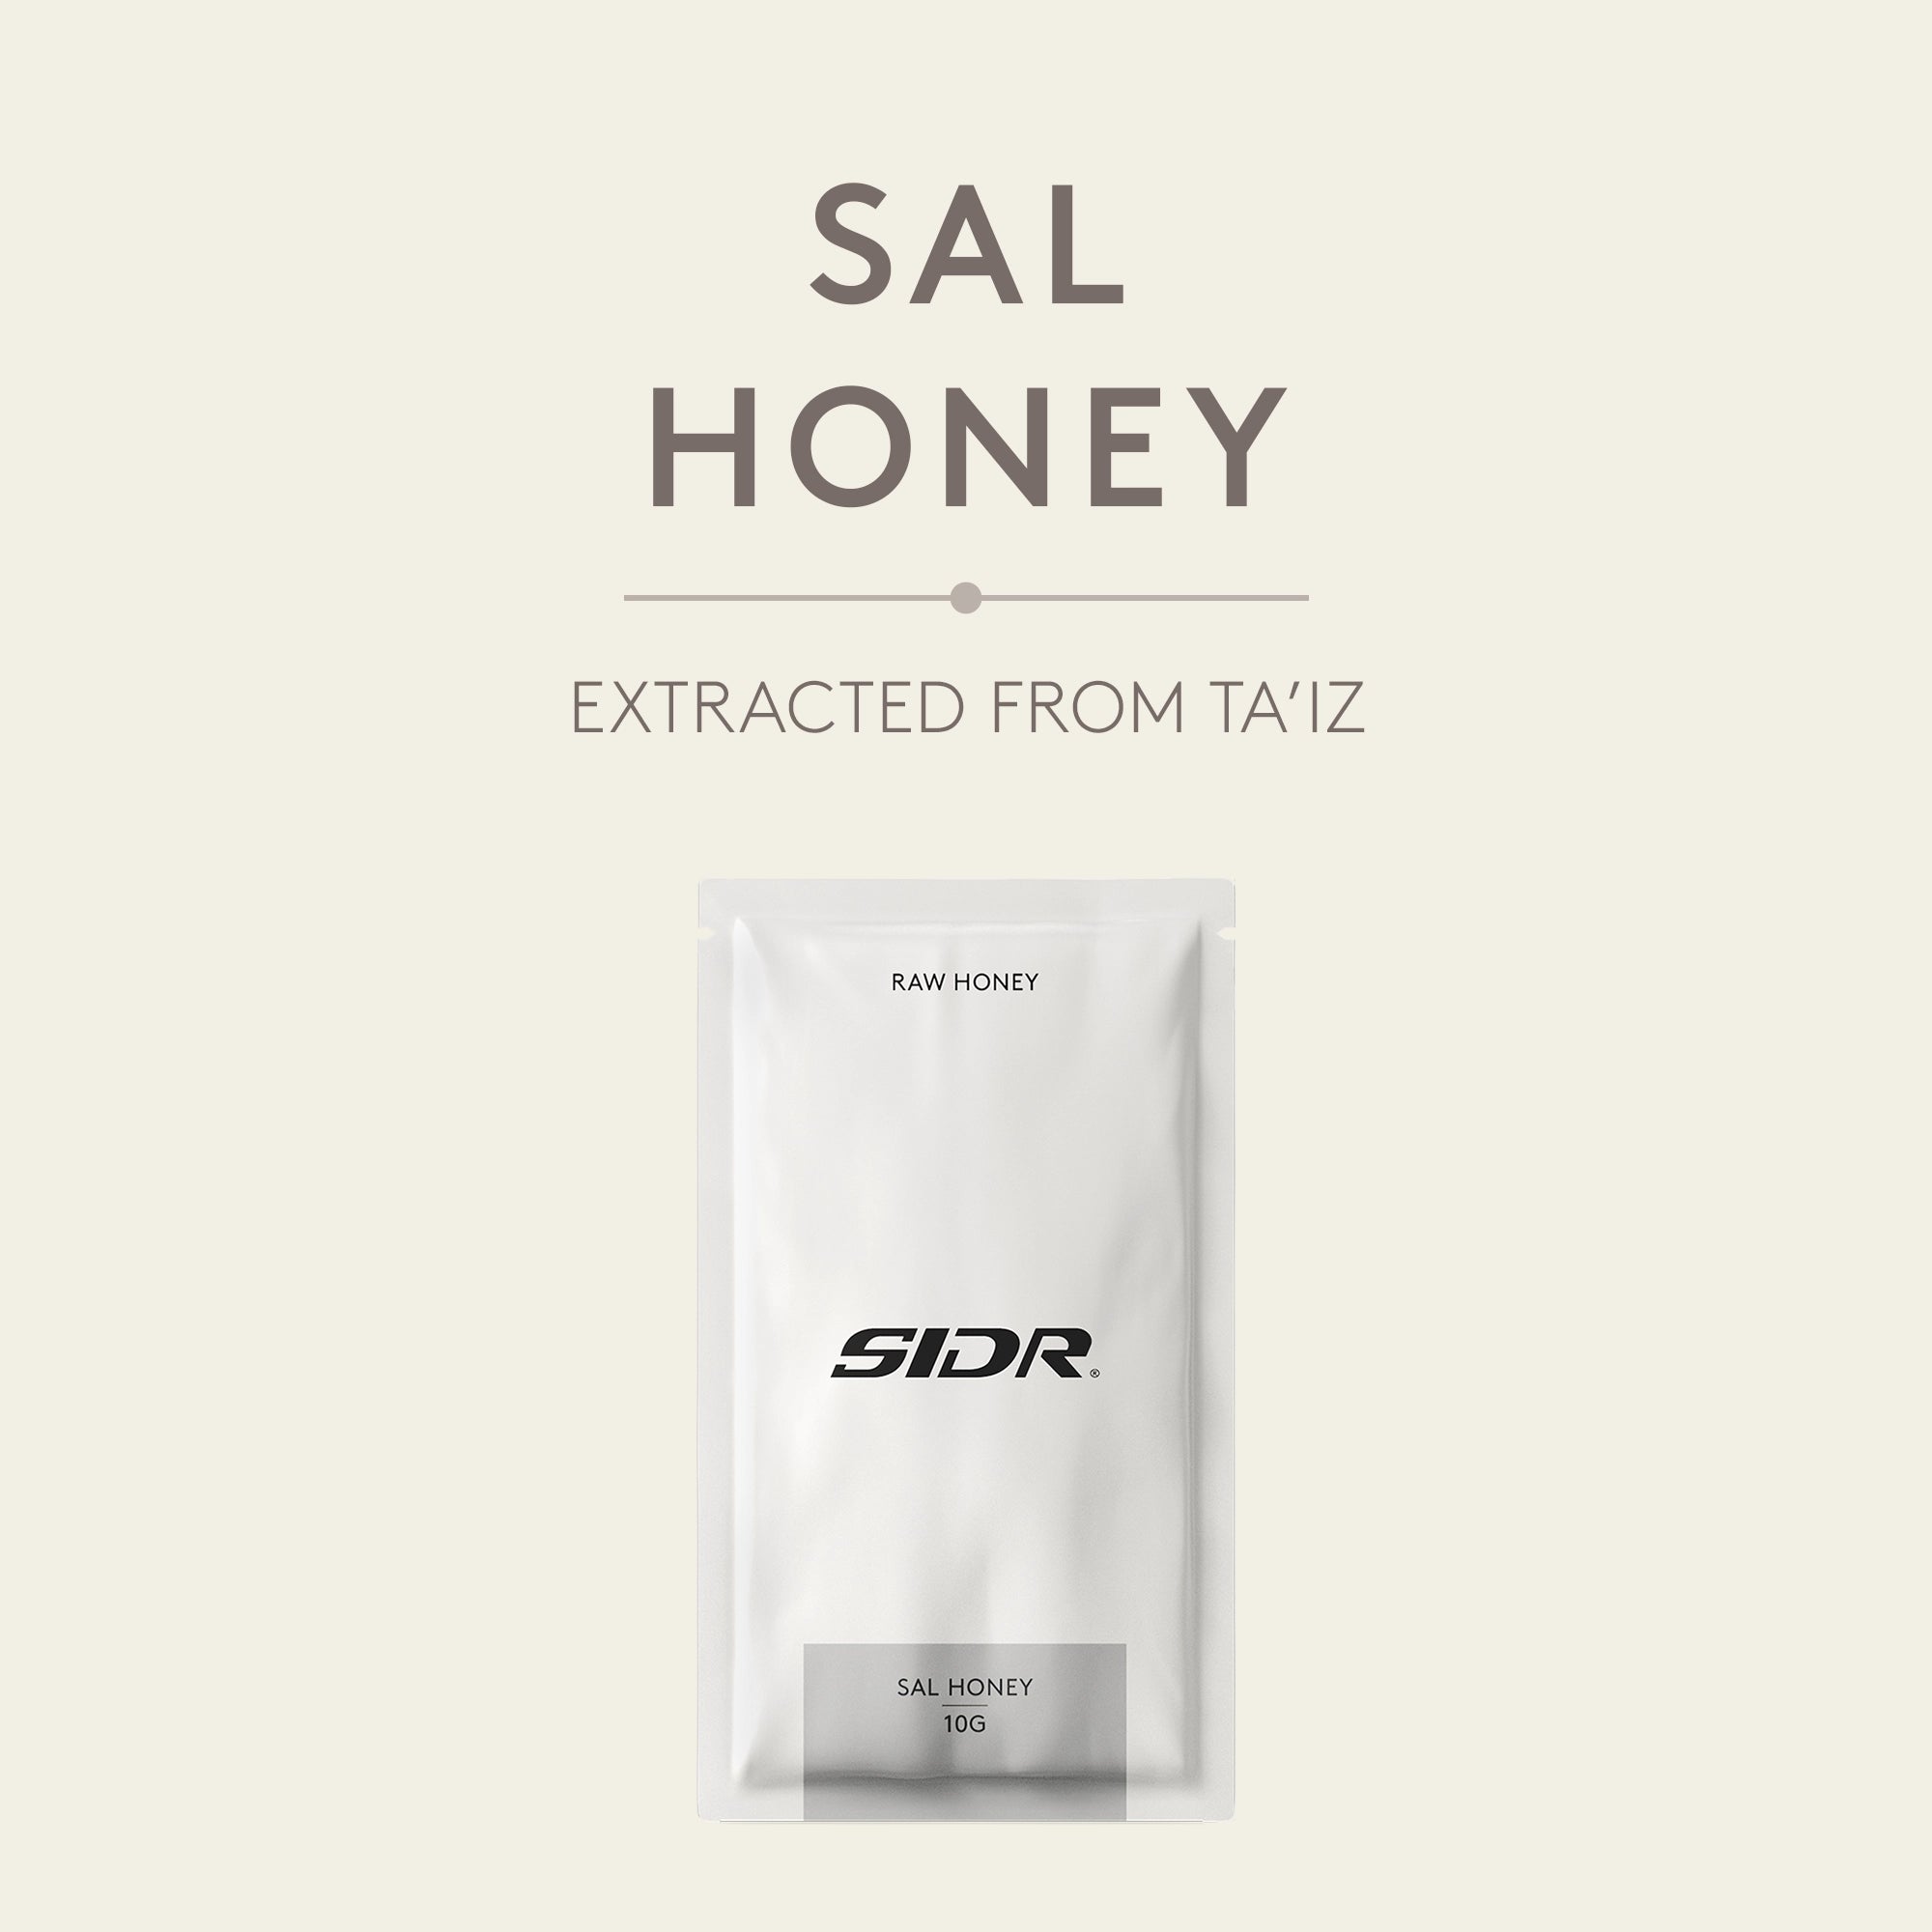 sal honey packet from taiz